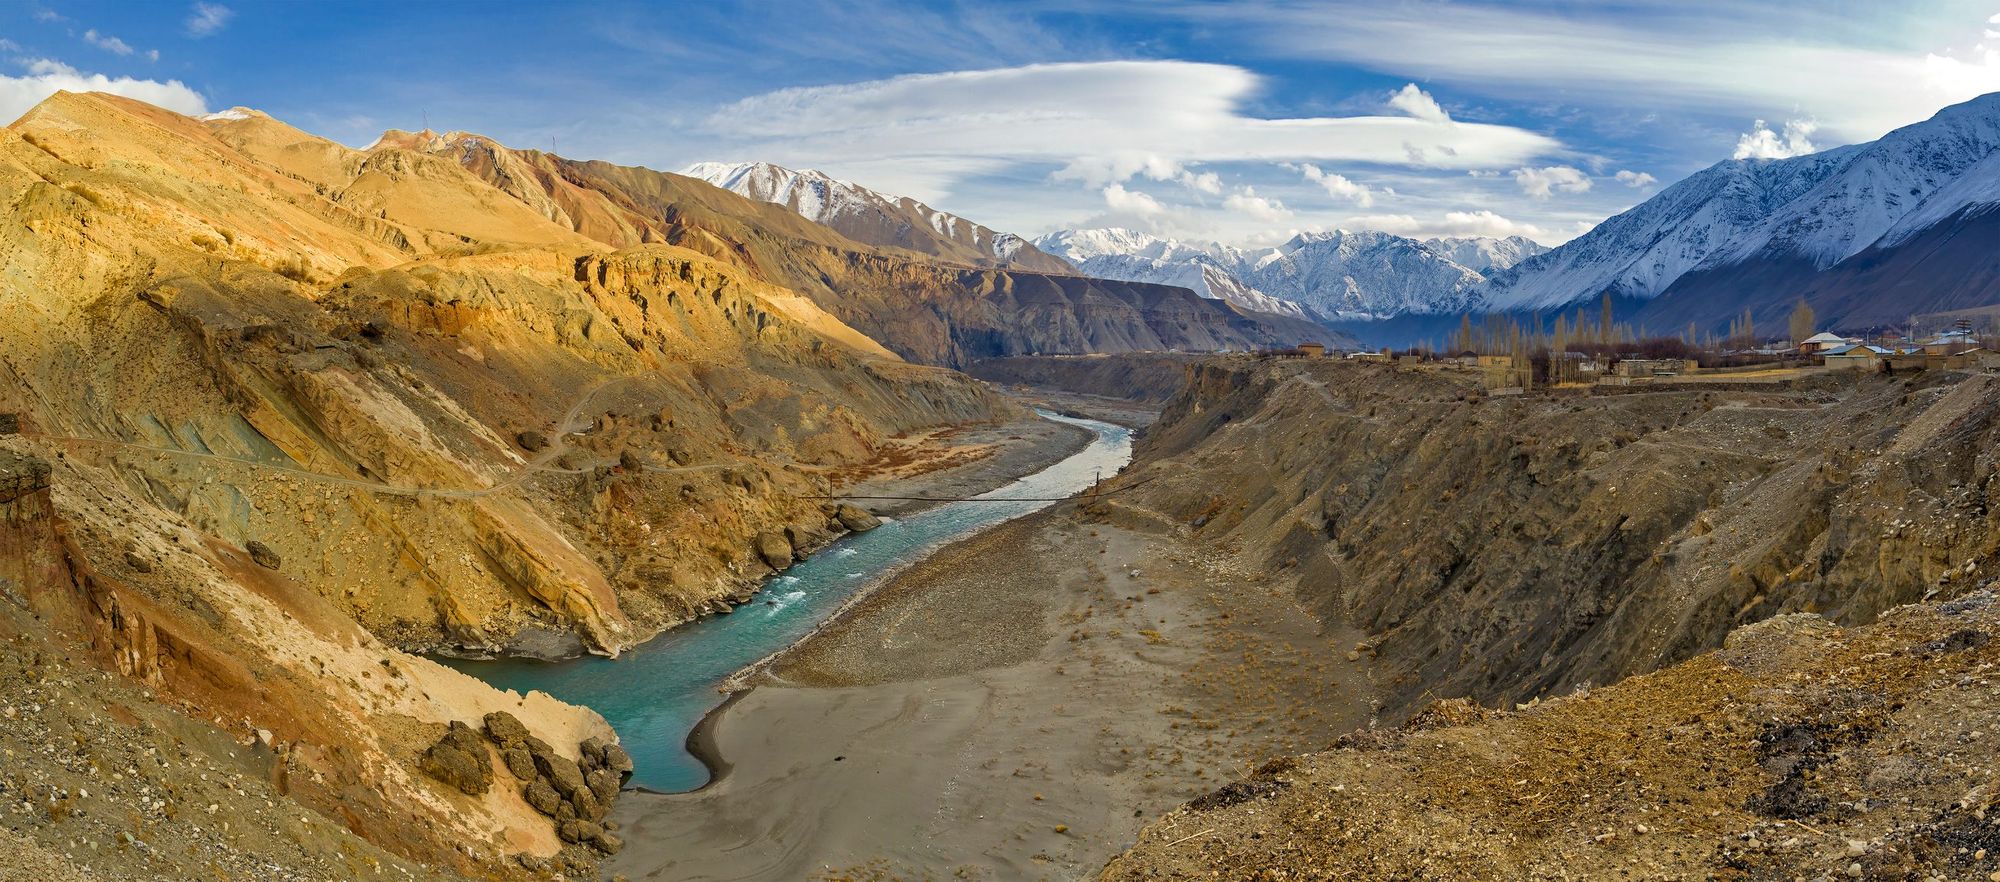 Zeravshan river valley in the Pamir Mountains, Tajikistan.